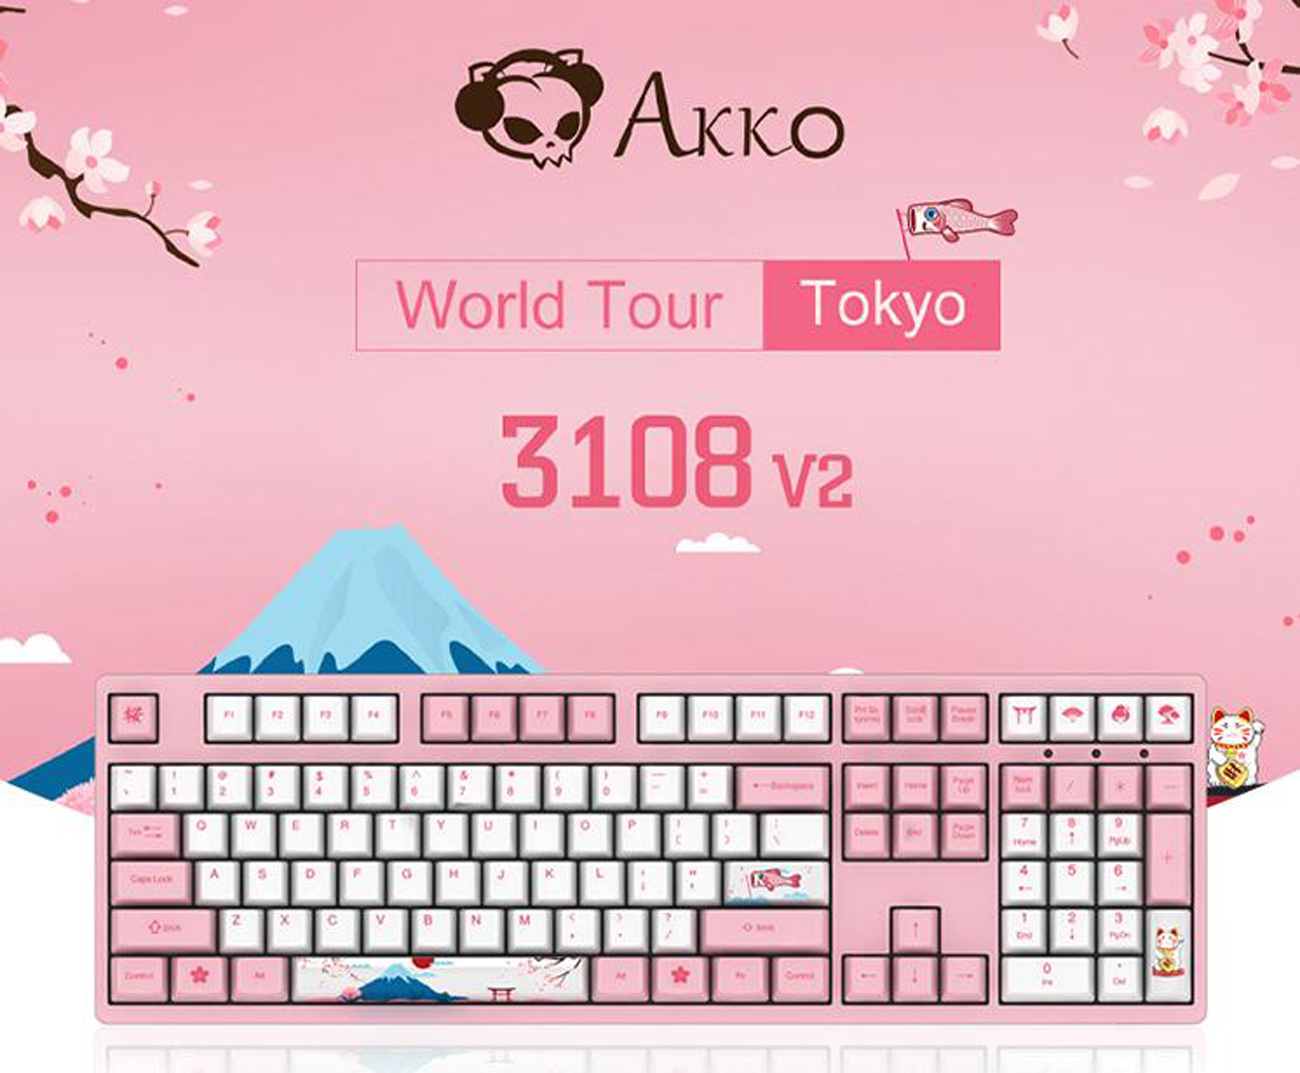 Akko world tour tokyo. Akko World Tour Tokyo r1 3108 v2. Akko 3108 v2 World Tokyo tu. Akko Sakura Tokyo. Клавиатура Tokyo фиолетовая.